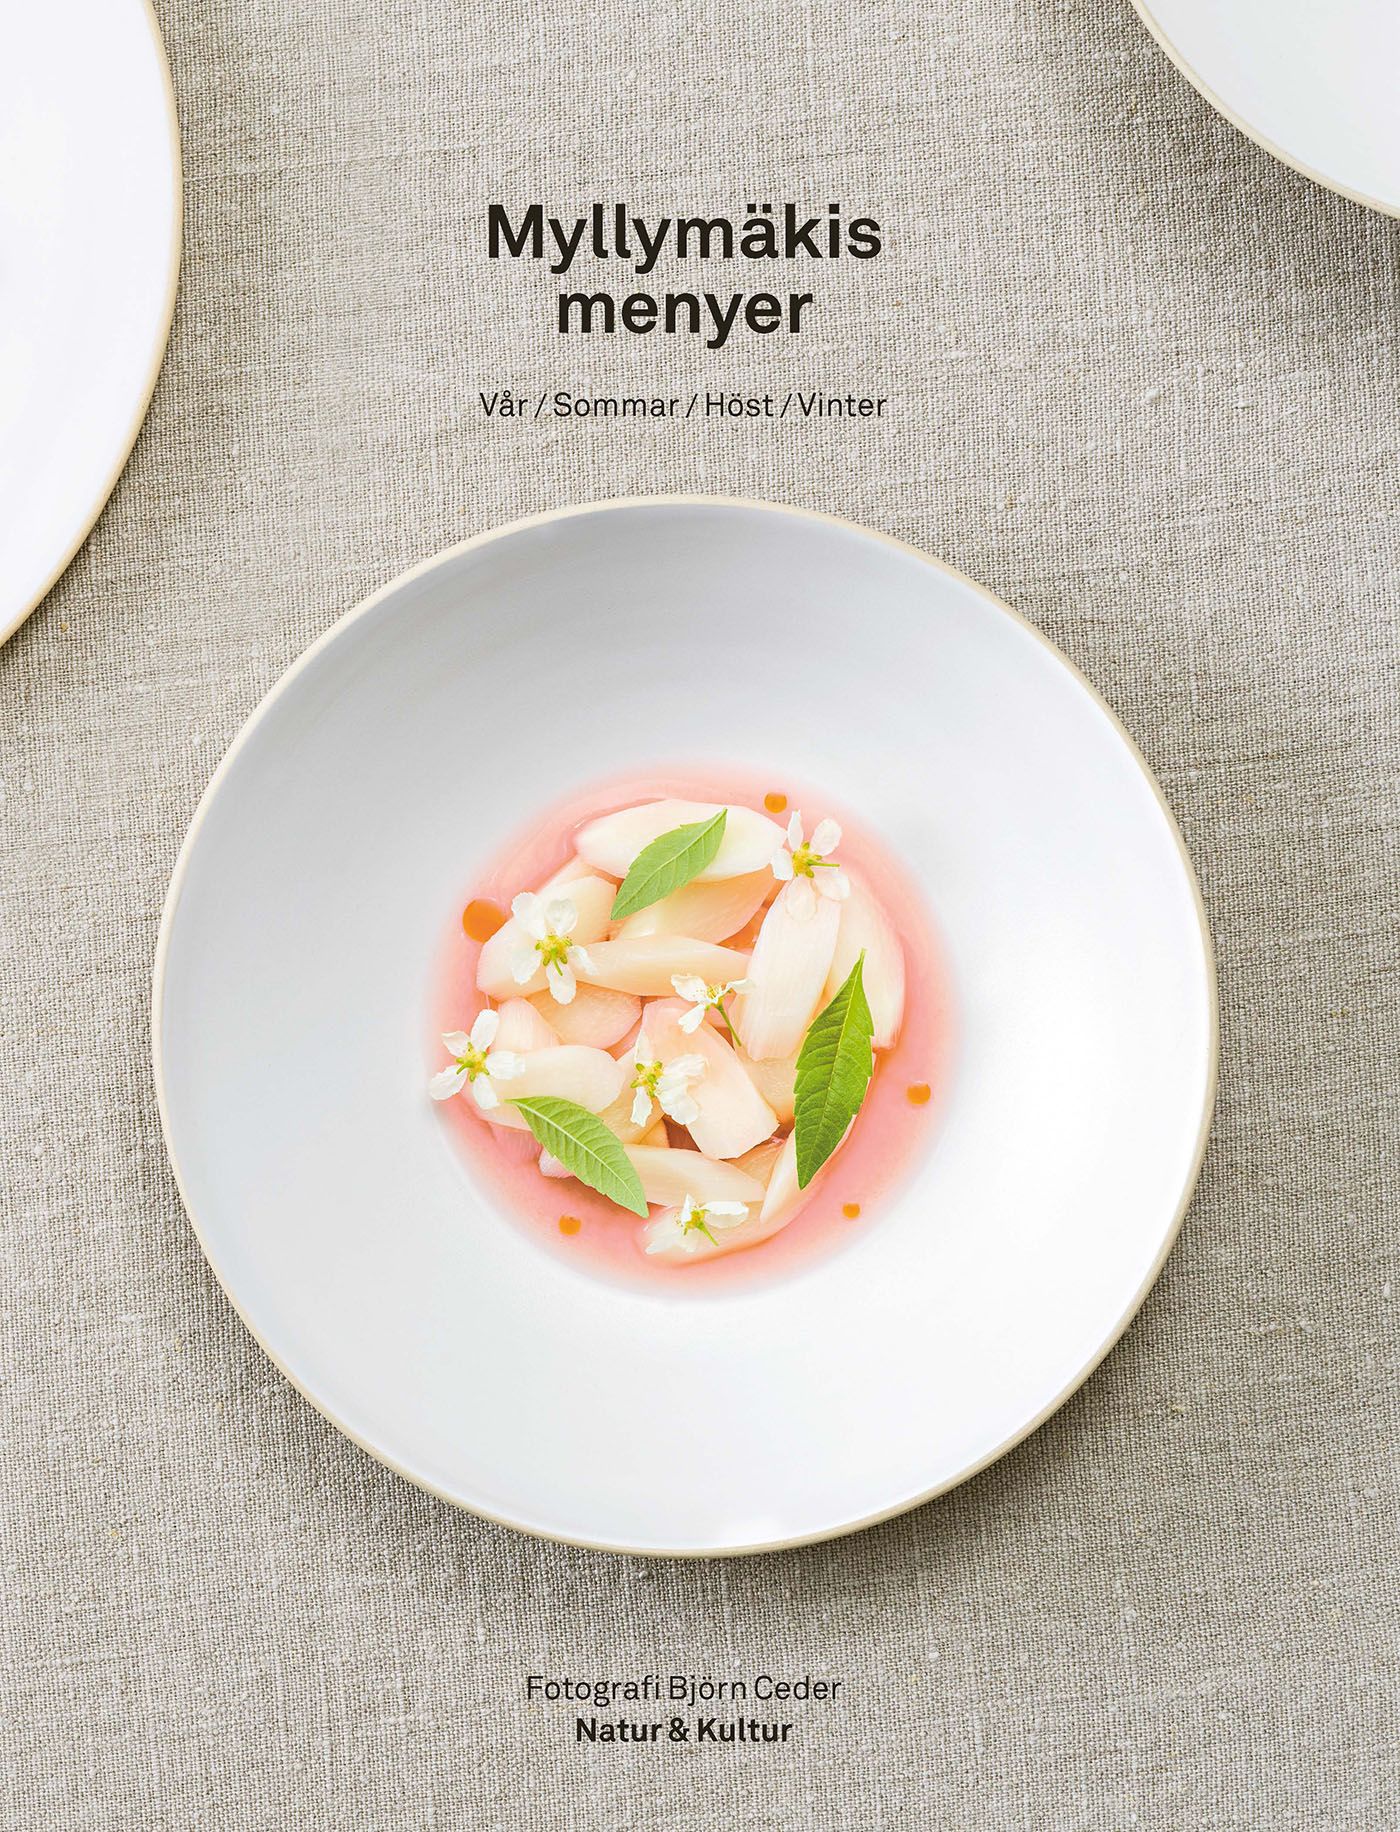 Myllymäkis menyer, e-bog af Tommy Myllymäki